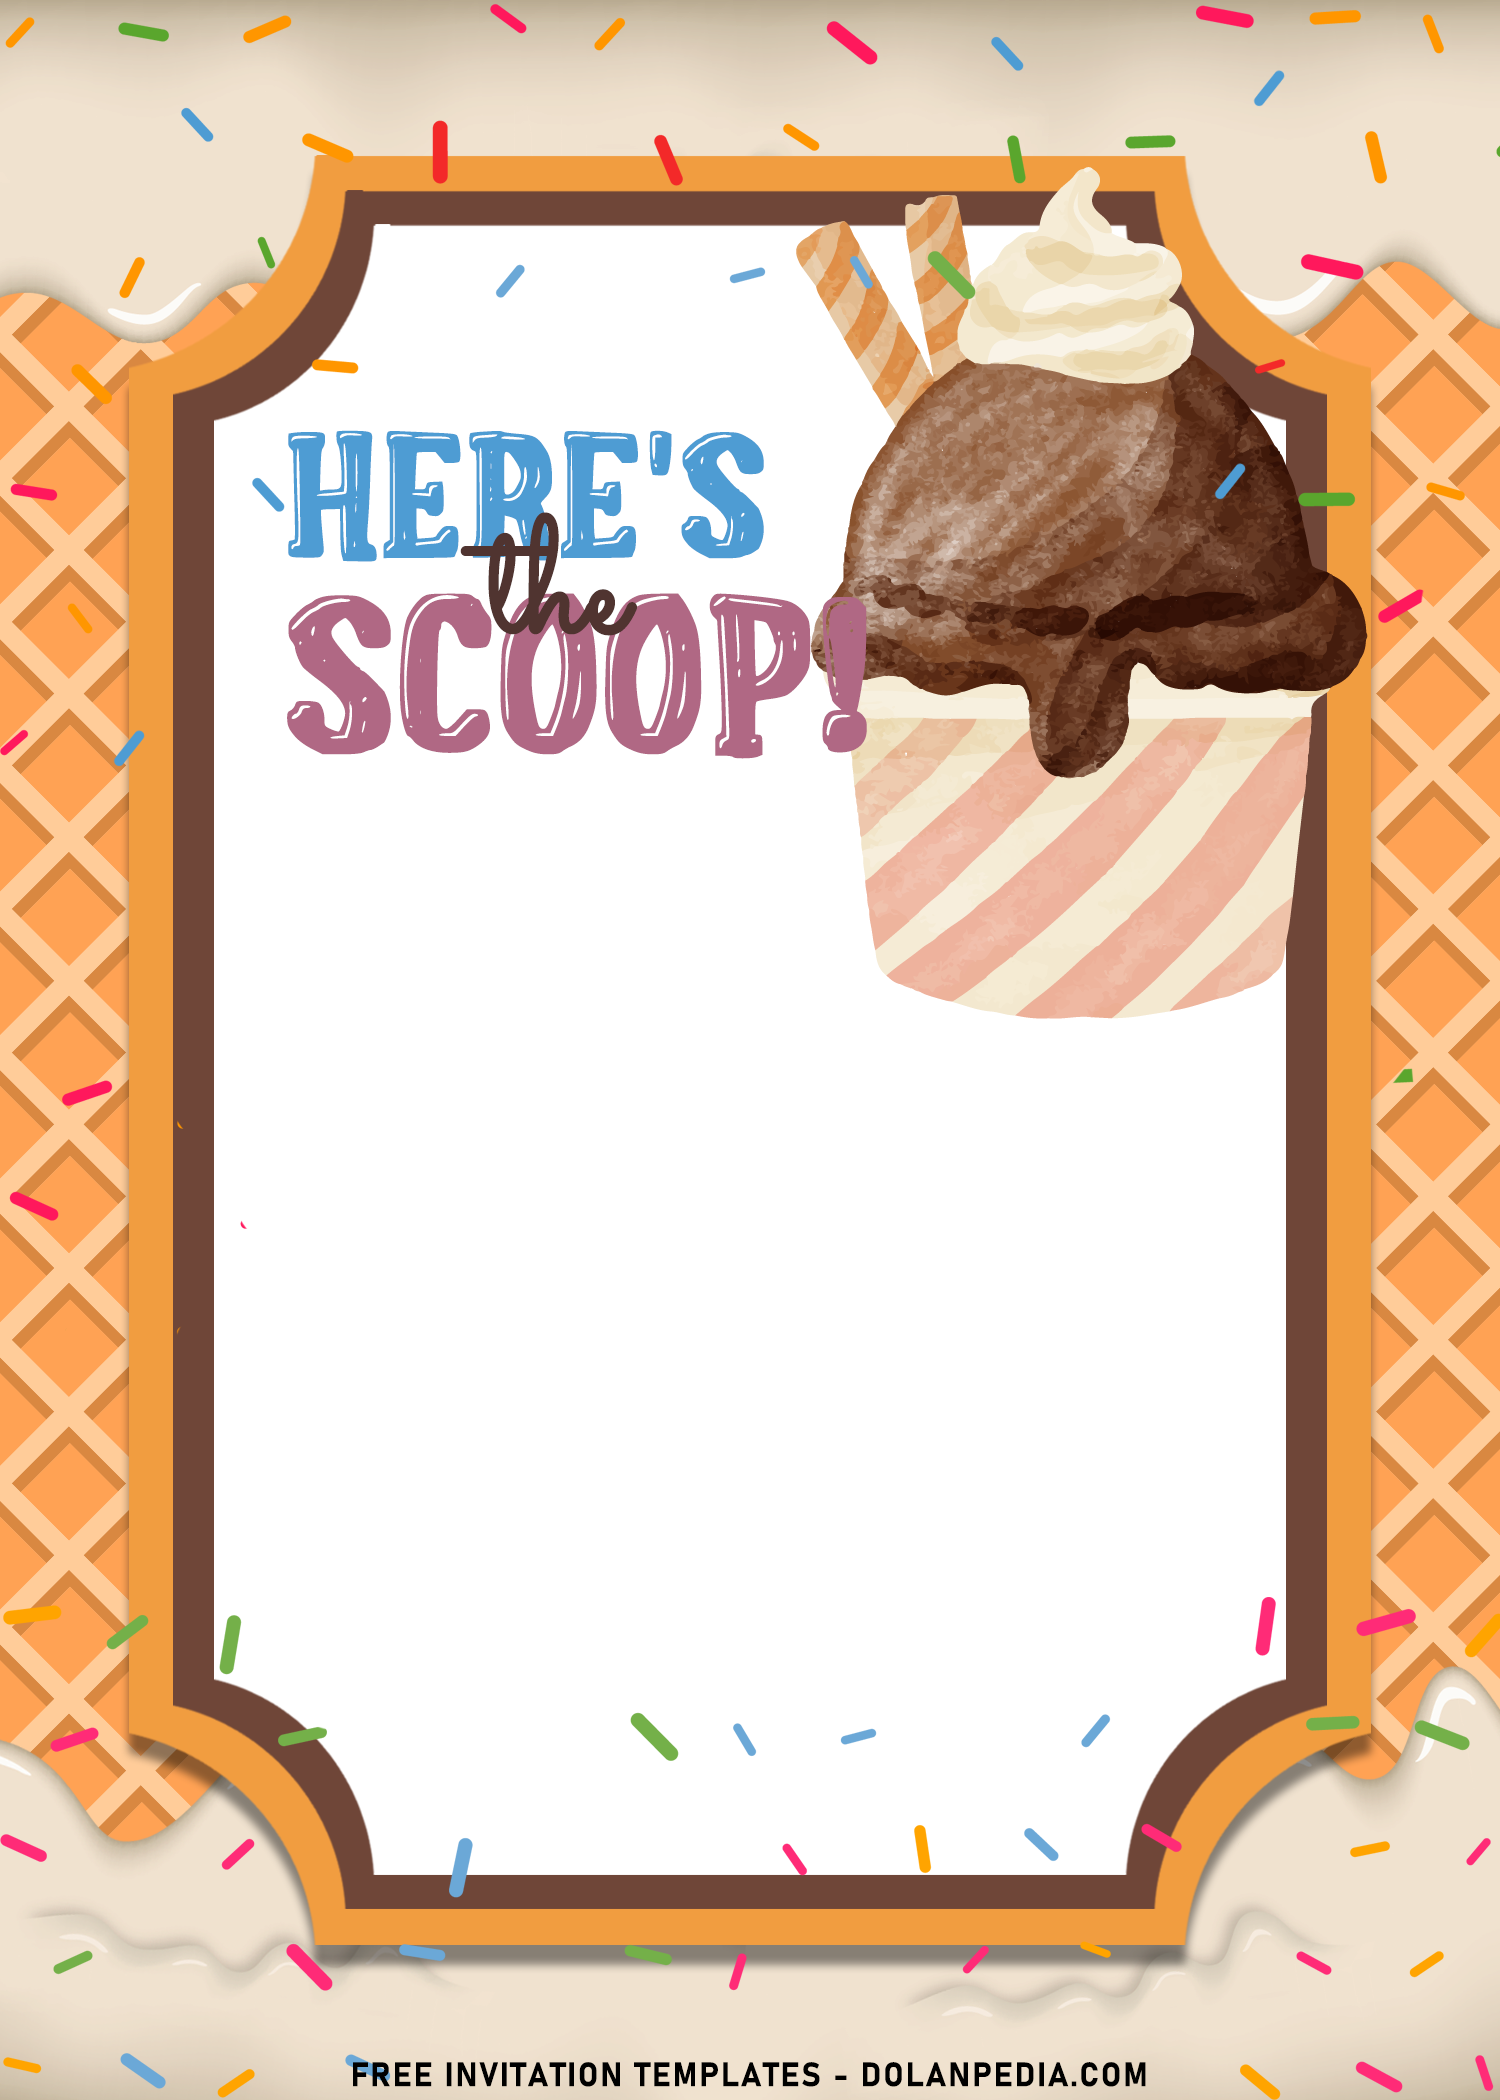 11-ice-cream-party-invitation-templates-for-kids-dolanpedia